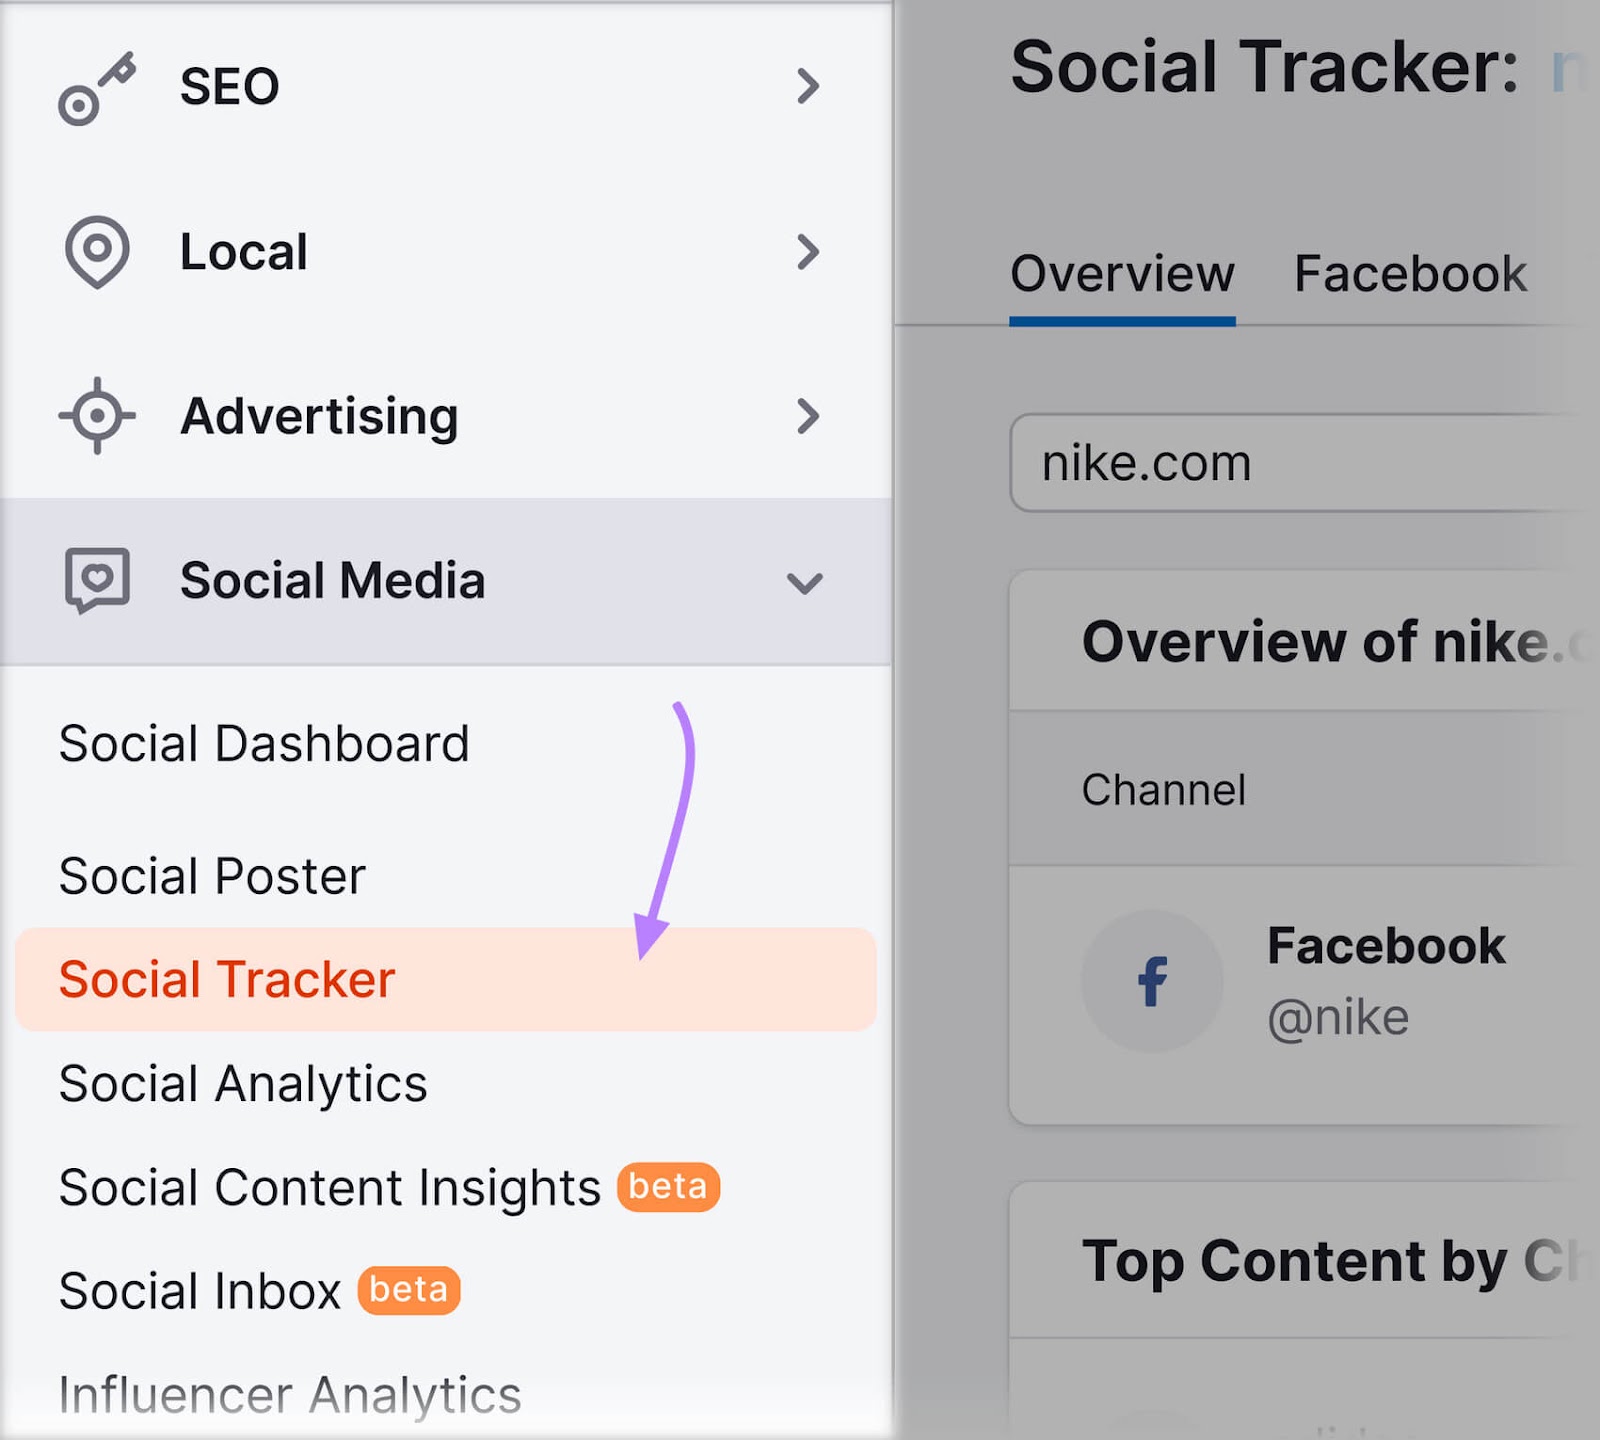 navigating to Social Tracker tool in Semrush dashboard